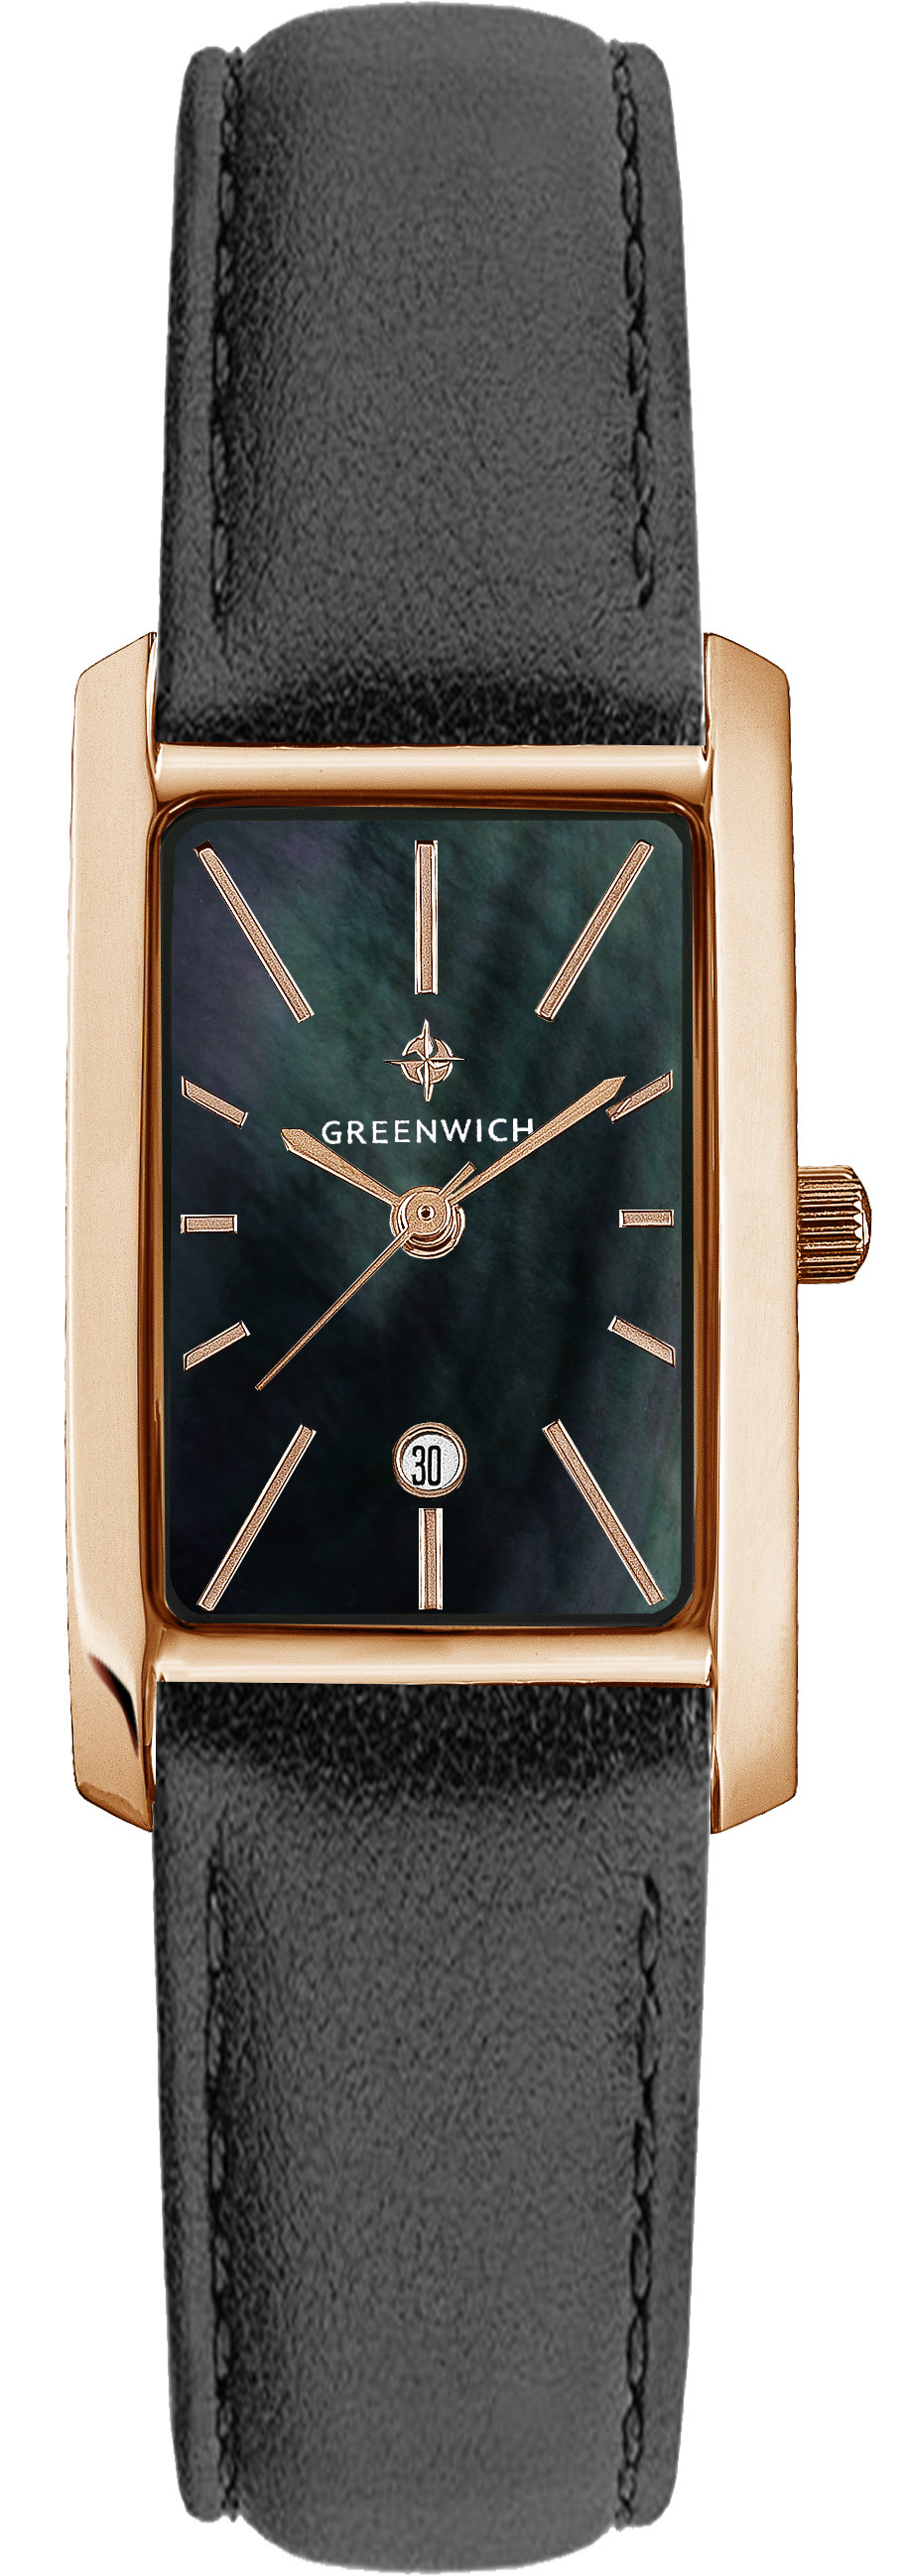 GW 511.41.11, женские часы Greenwich Vesta